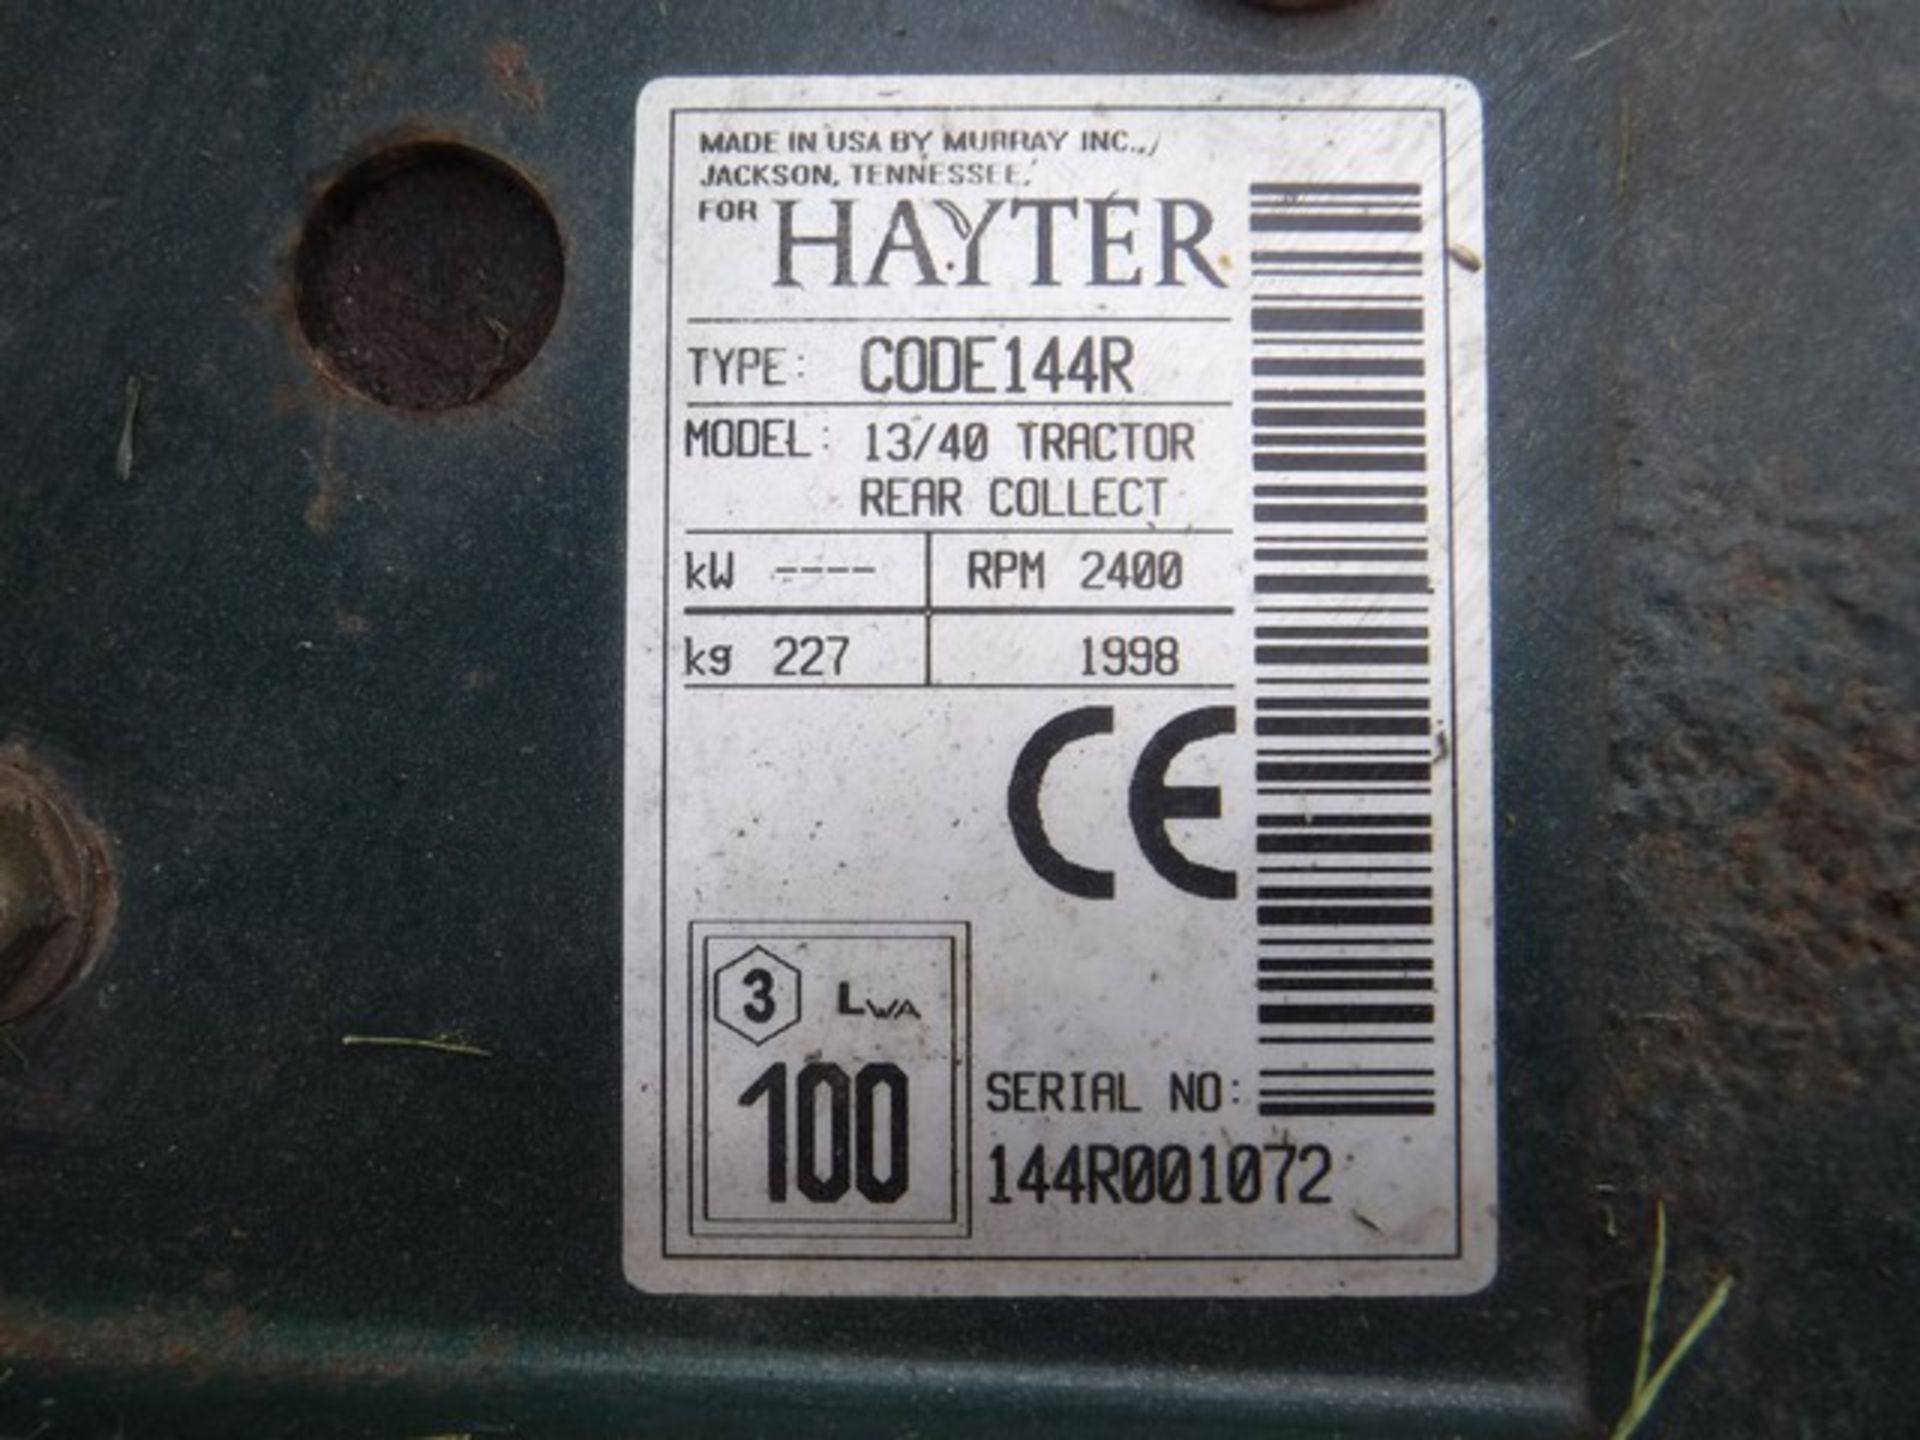 HAYTER HERTIGOR 13/40 Ride-on mower for spares or repairs - Image 9 of 9